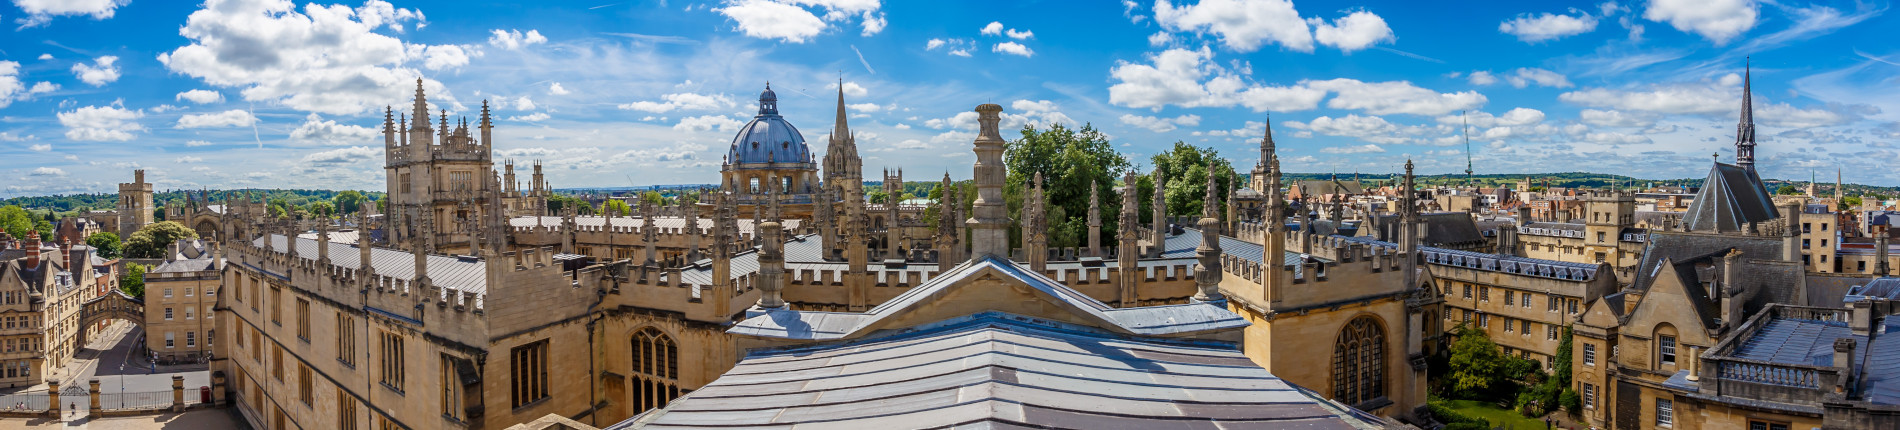 Image: Panorama of Oxford